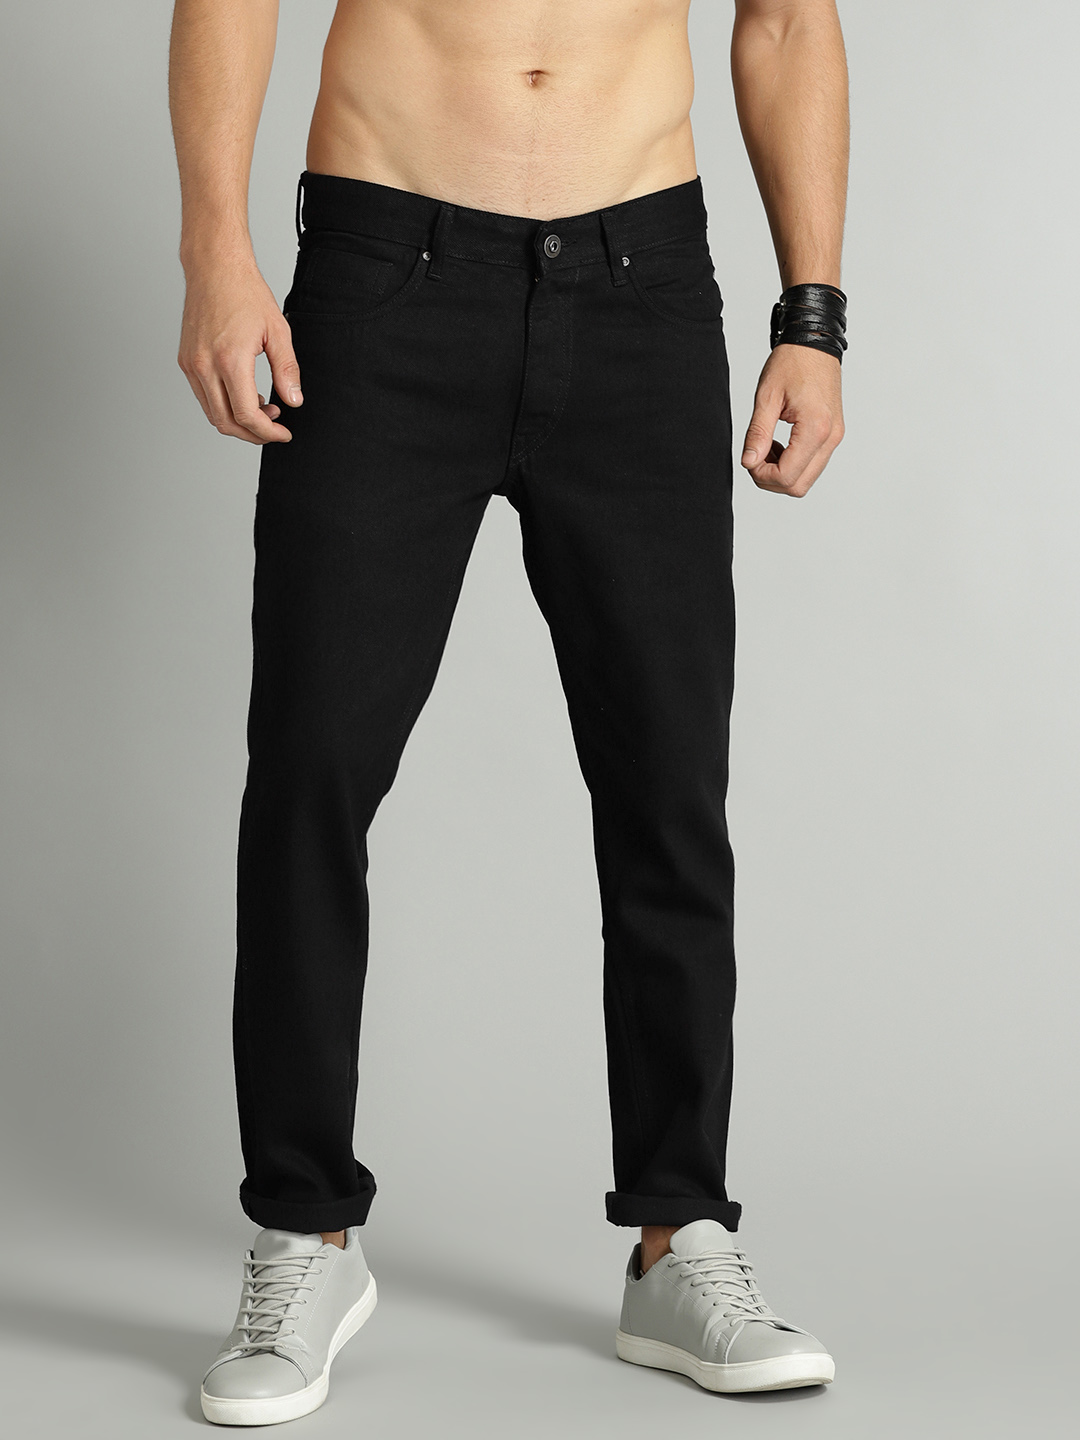 Buy Men's Black Slim Fit Stretchable Jeans (28, Black) at Amazon.in